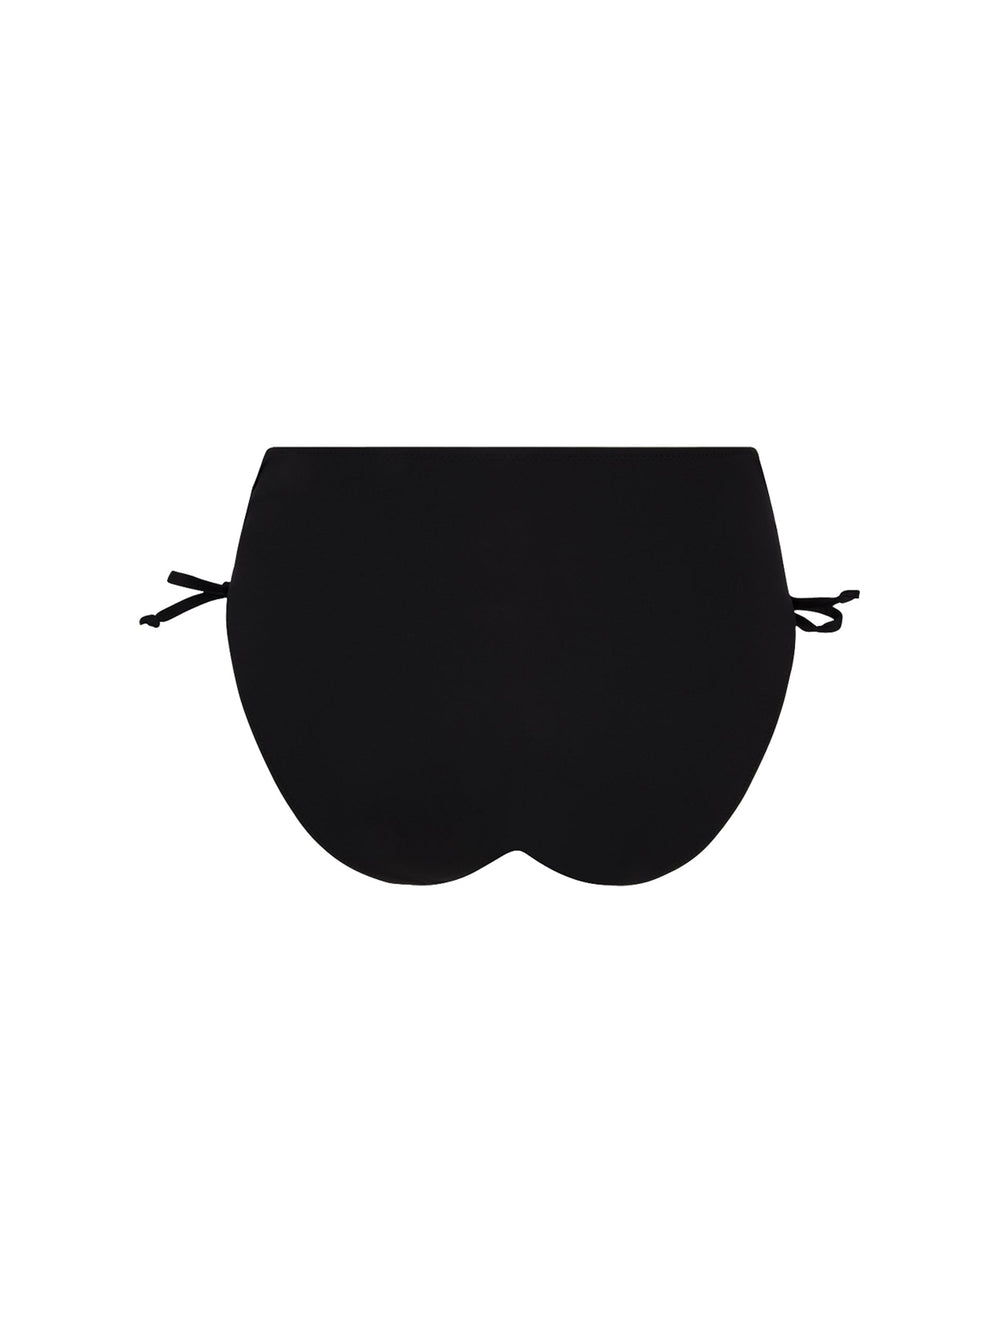 Antigel by Lise Charmel - La Muse Dolce Vita Classic Side Ties Bikini Bottom Poise Noir フルビキニブリーフ Antigel by Lise Charmel 水着